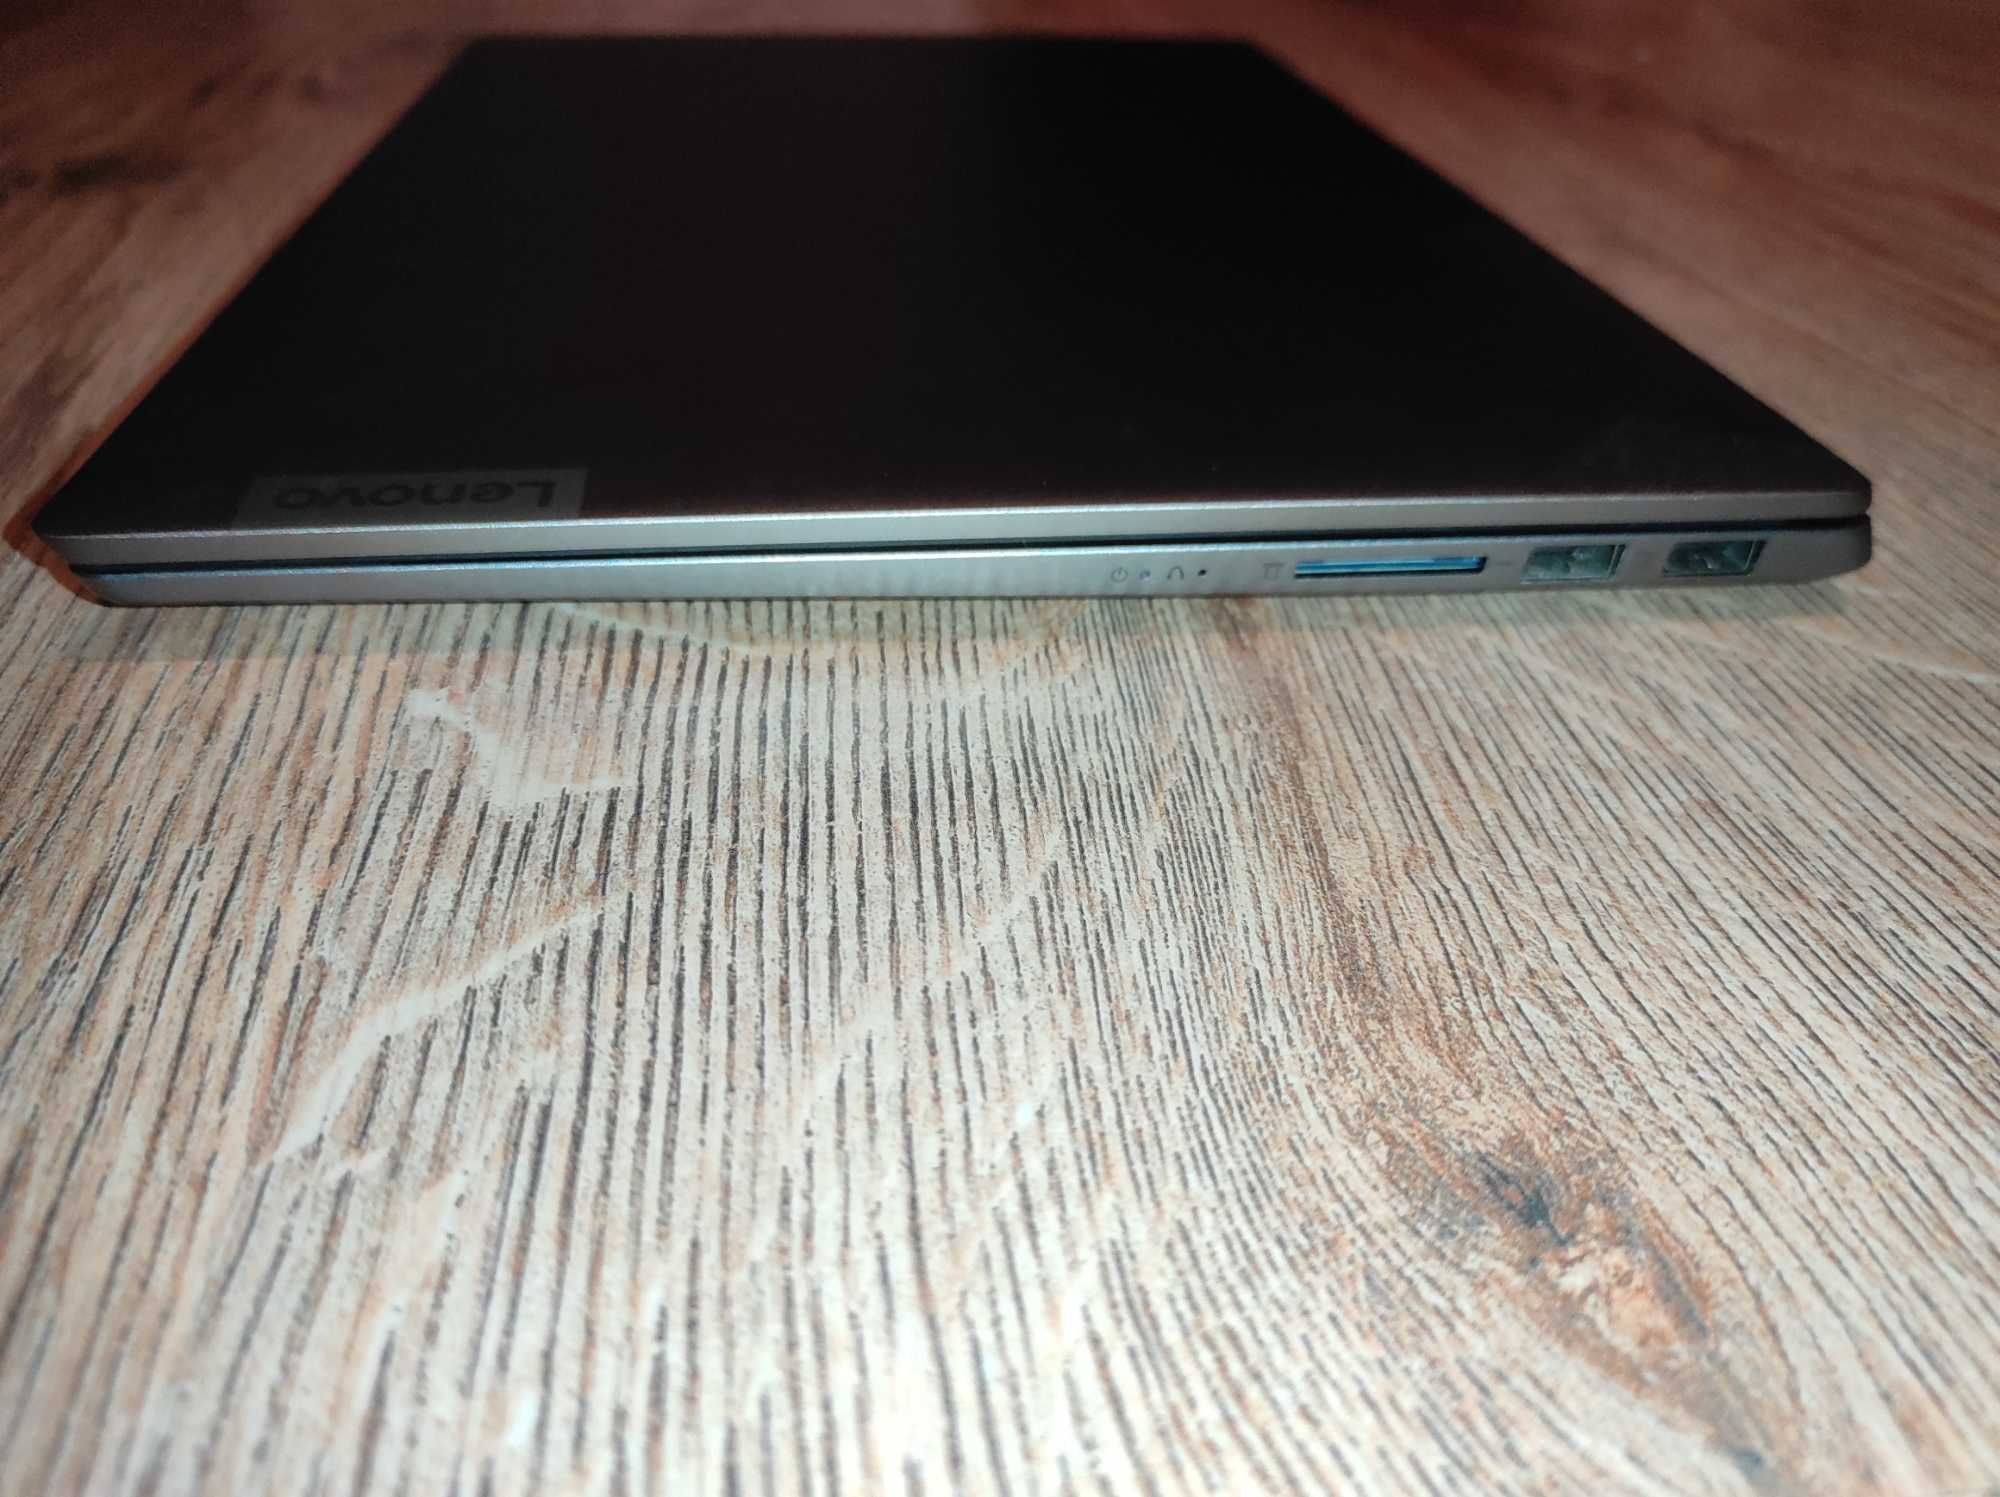 Laptop Lenovo IdeaPad Ultra Books Slim S540 -14 Cali - Win10